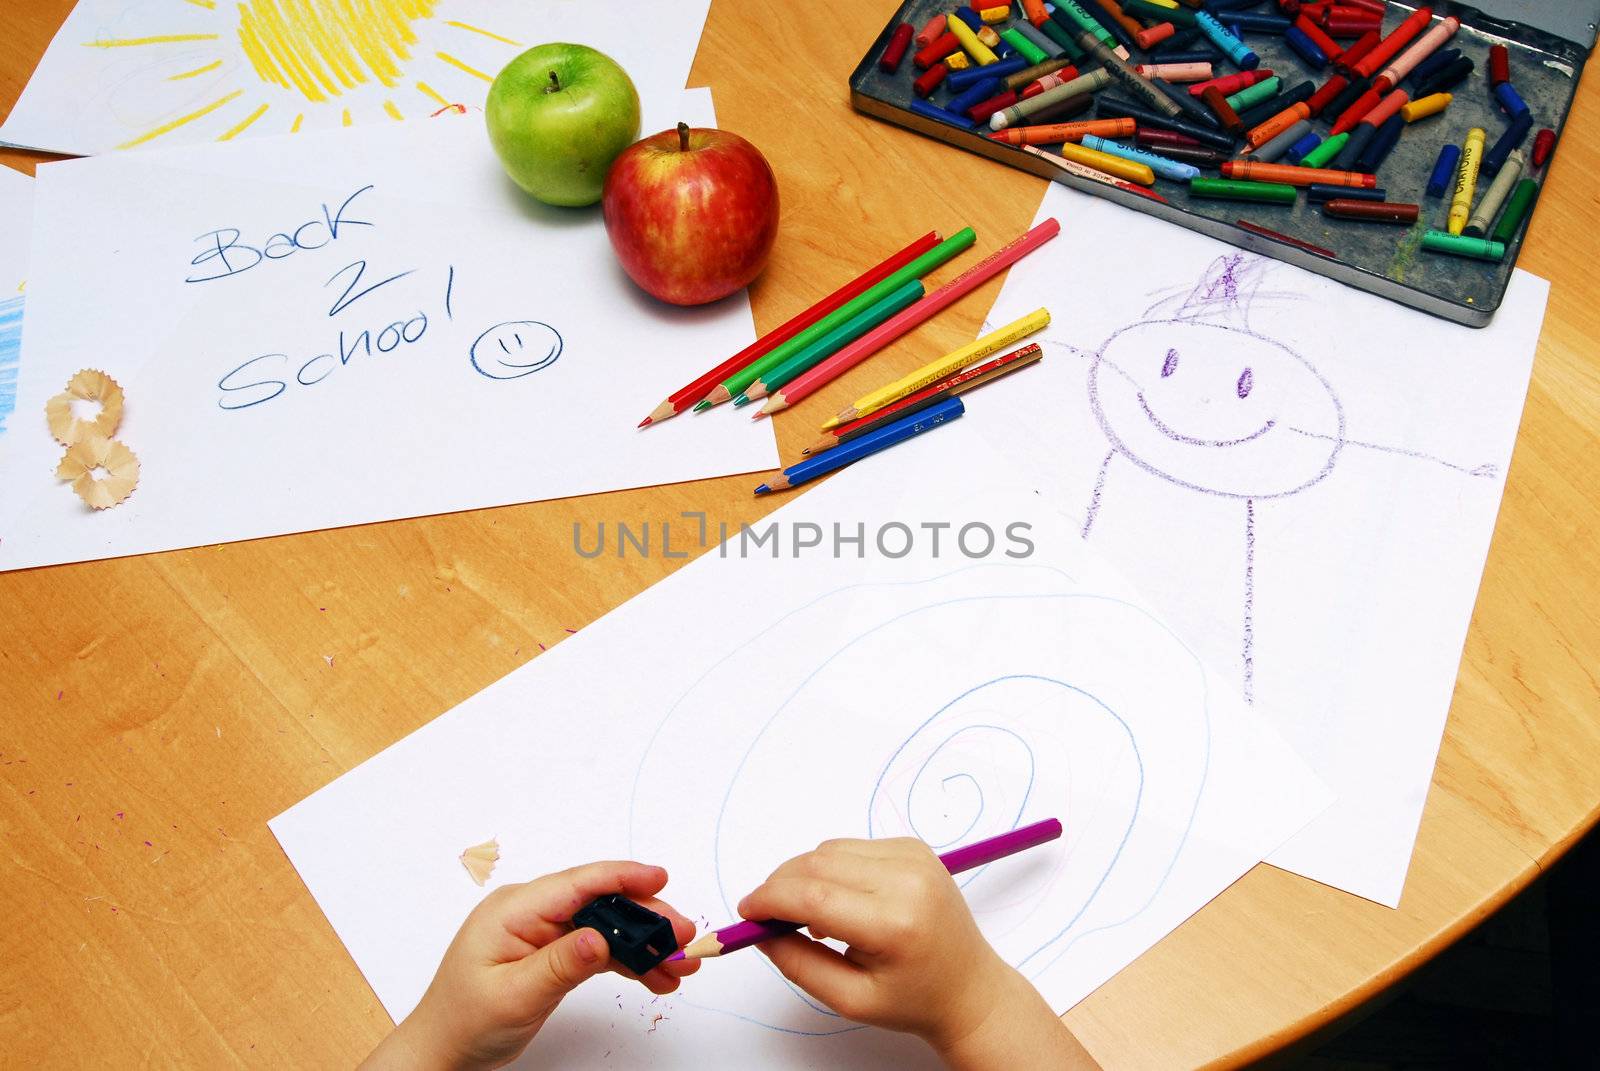 Little hands sharpening a pencil between school supplies and apples.